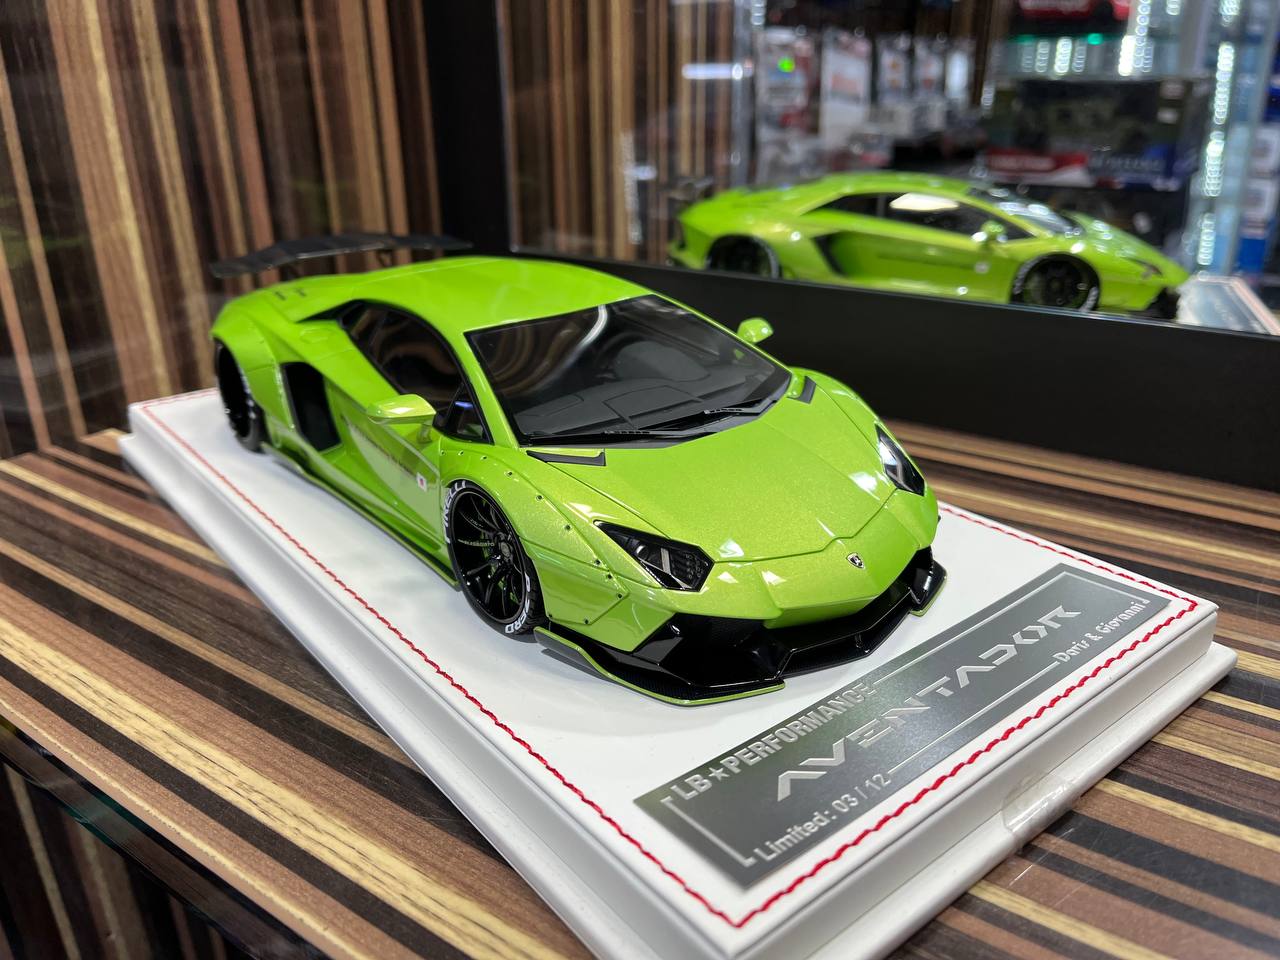 Davis & Giovanni Lamborghini Aventador LBWK 1/18 Resin Model - Apple Green|Sold in Dturman.com Dubai UAE.